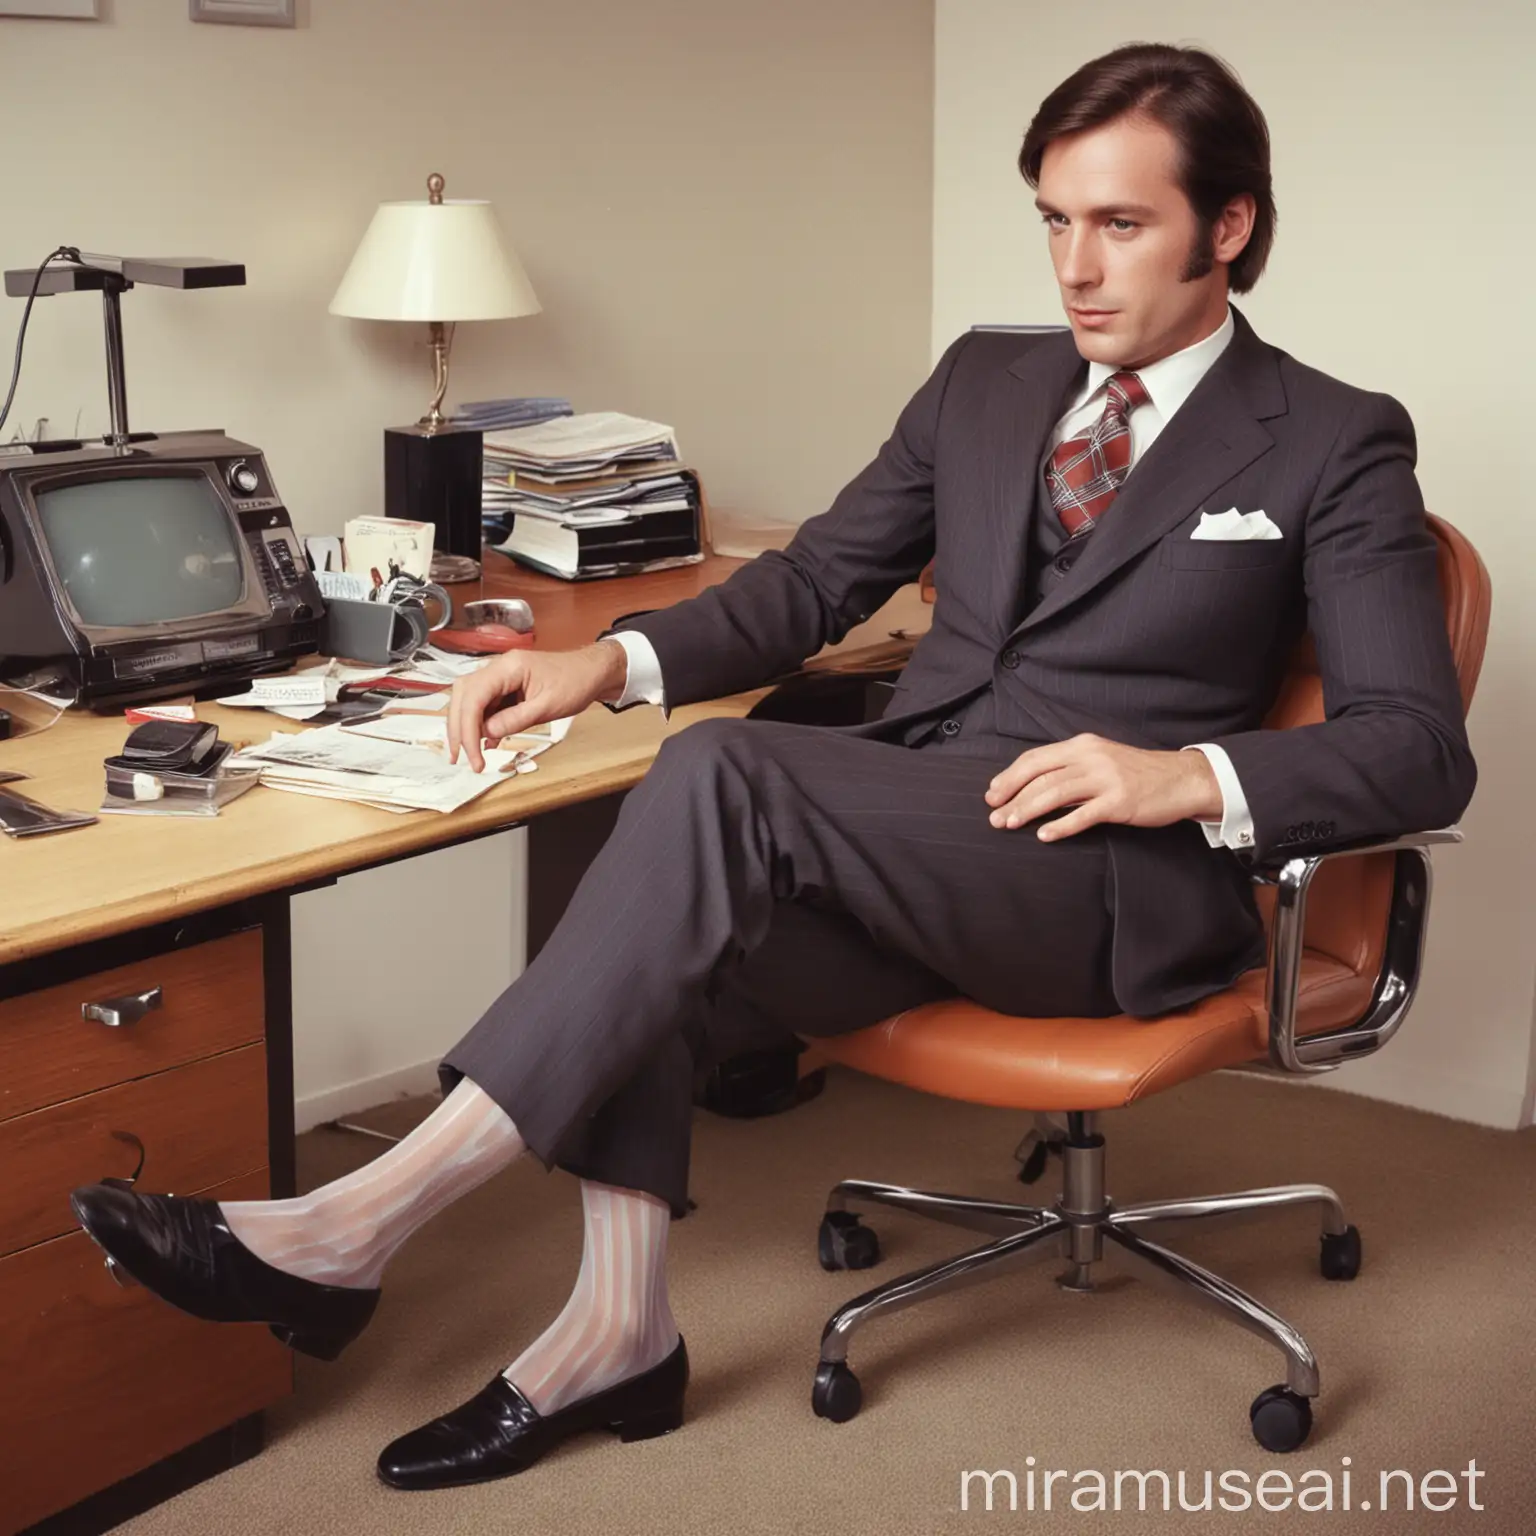 1972, man in three piece suit, sat at office desk, admiring his feet wearing sheer socks